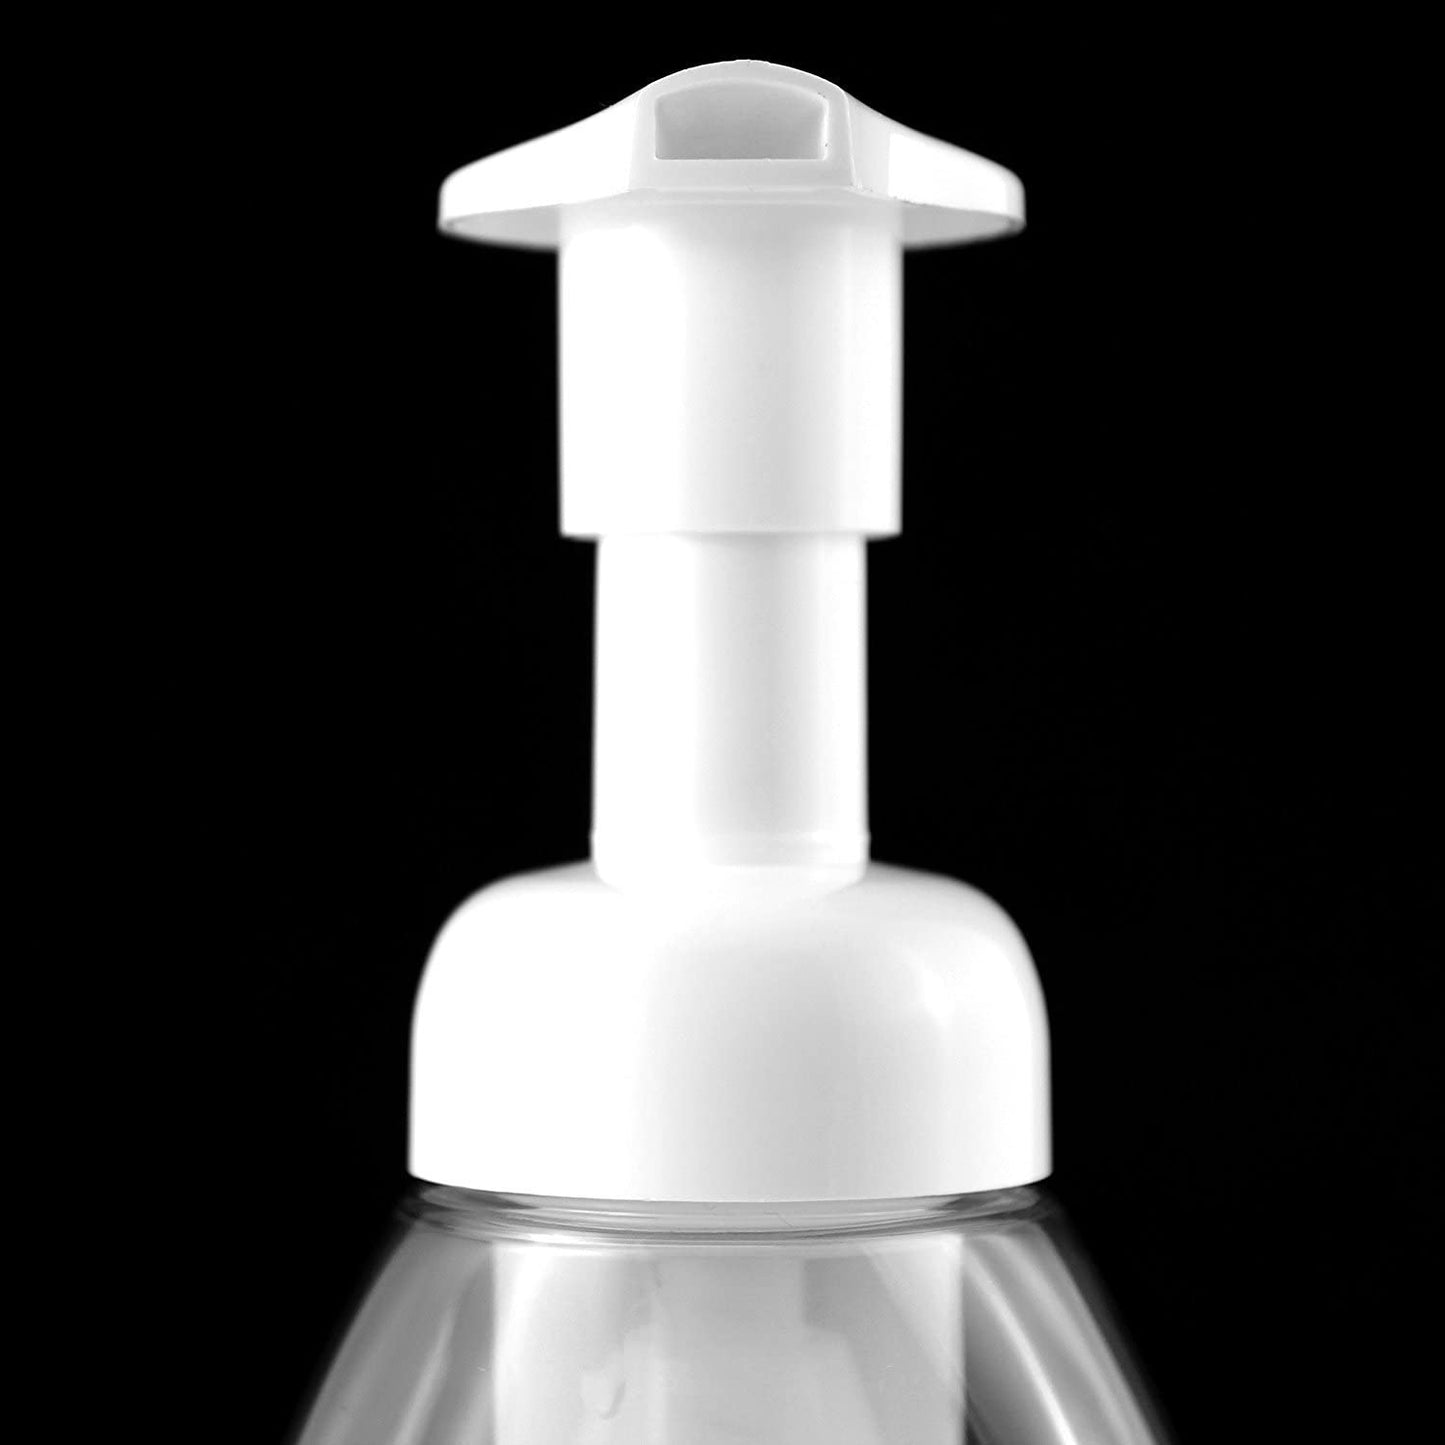 Foaming Soap Dispensers 8.5oz / 250ml Capacity (120pk) - SH_1270_BUNDLE